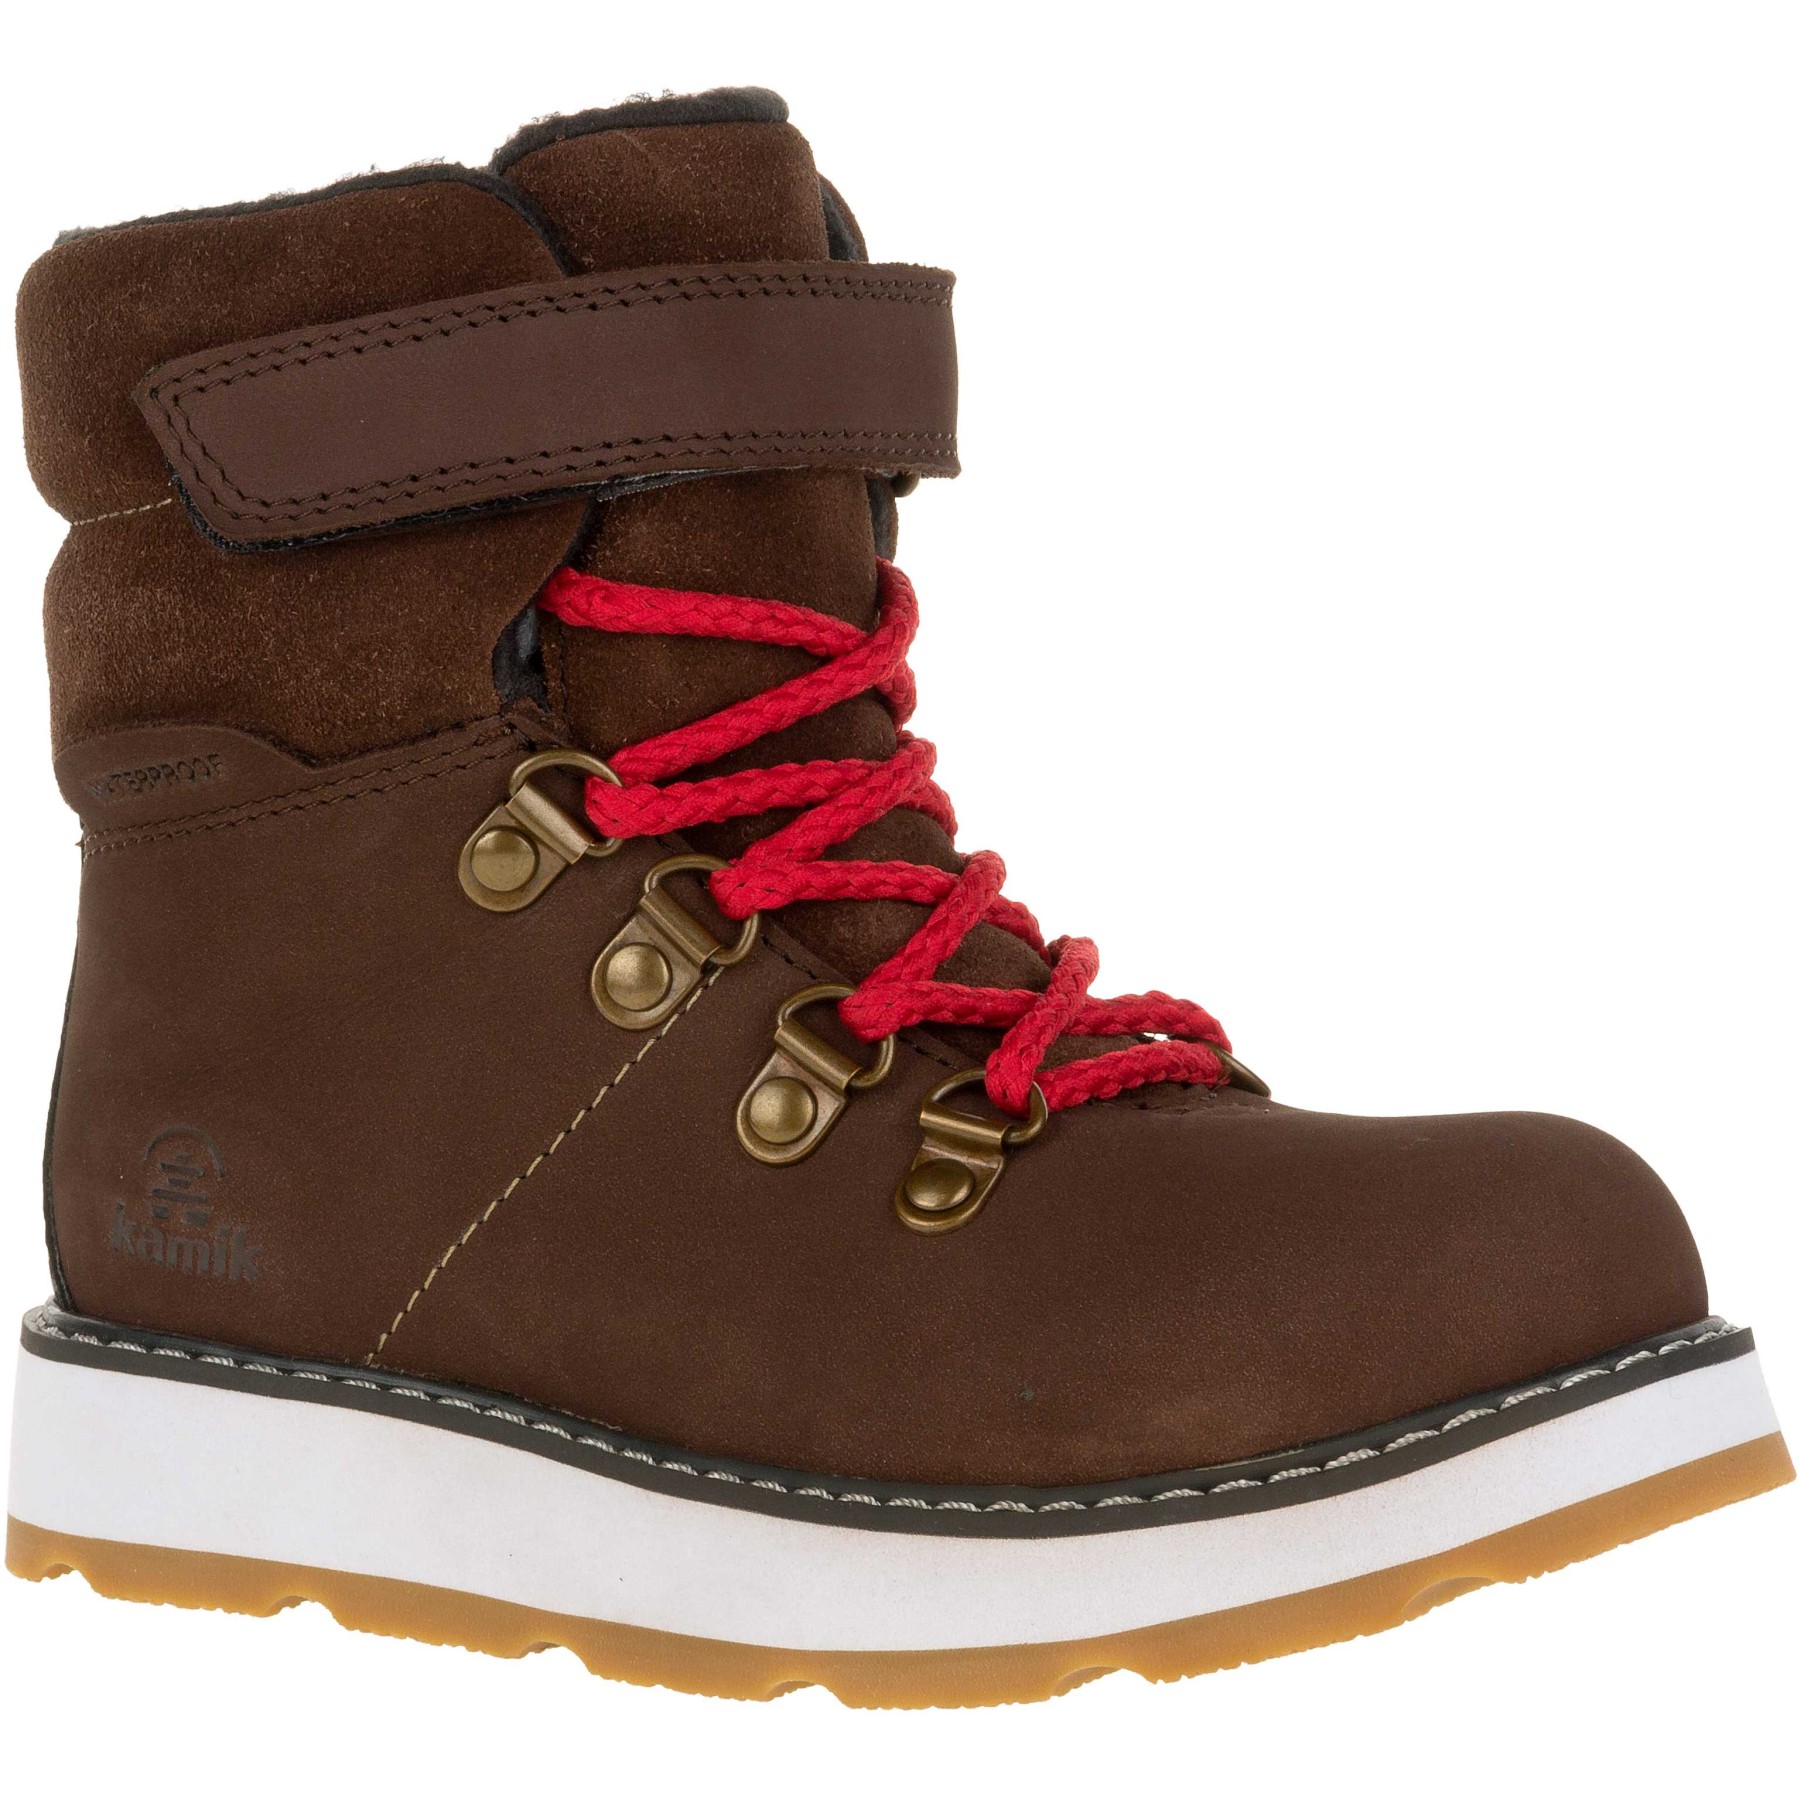 Productfoto van Kamik Rise Lo Kids Winter Boots - Brown